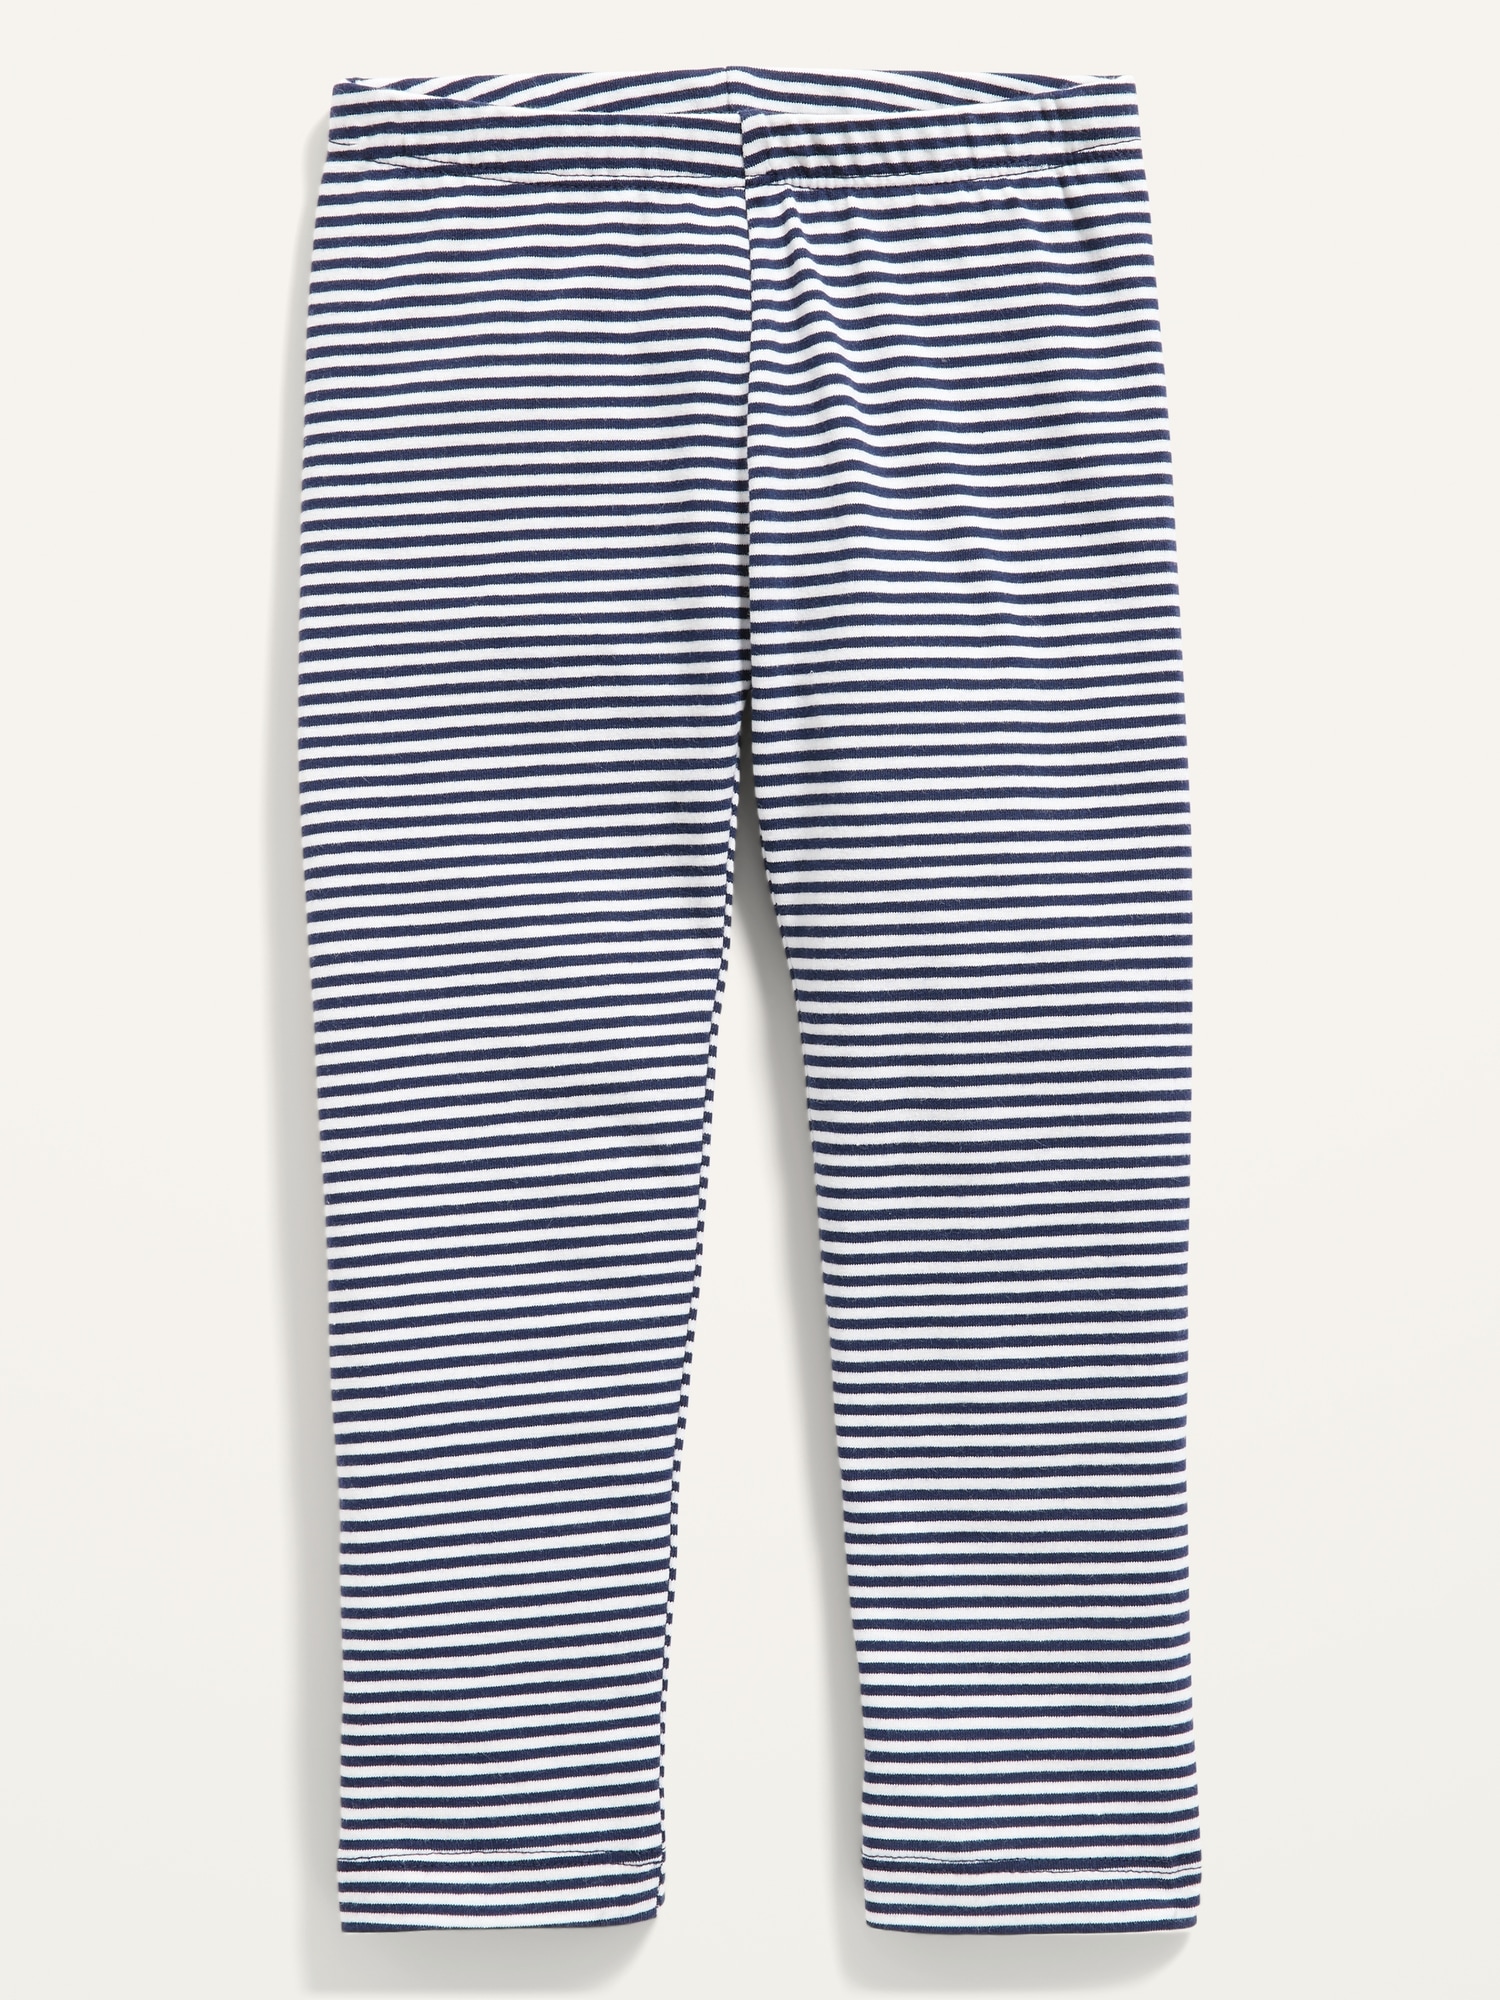 American Apparel Stripe Cotton Spandex Jersey Legging